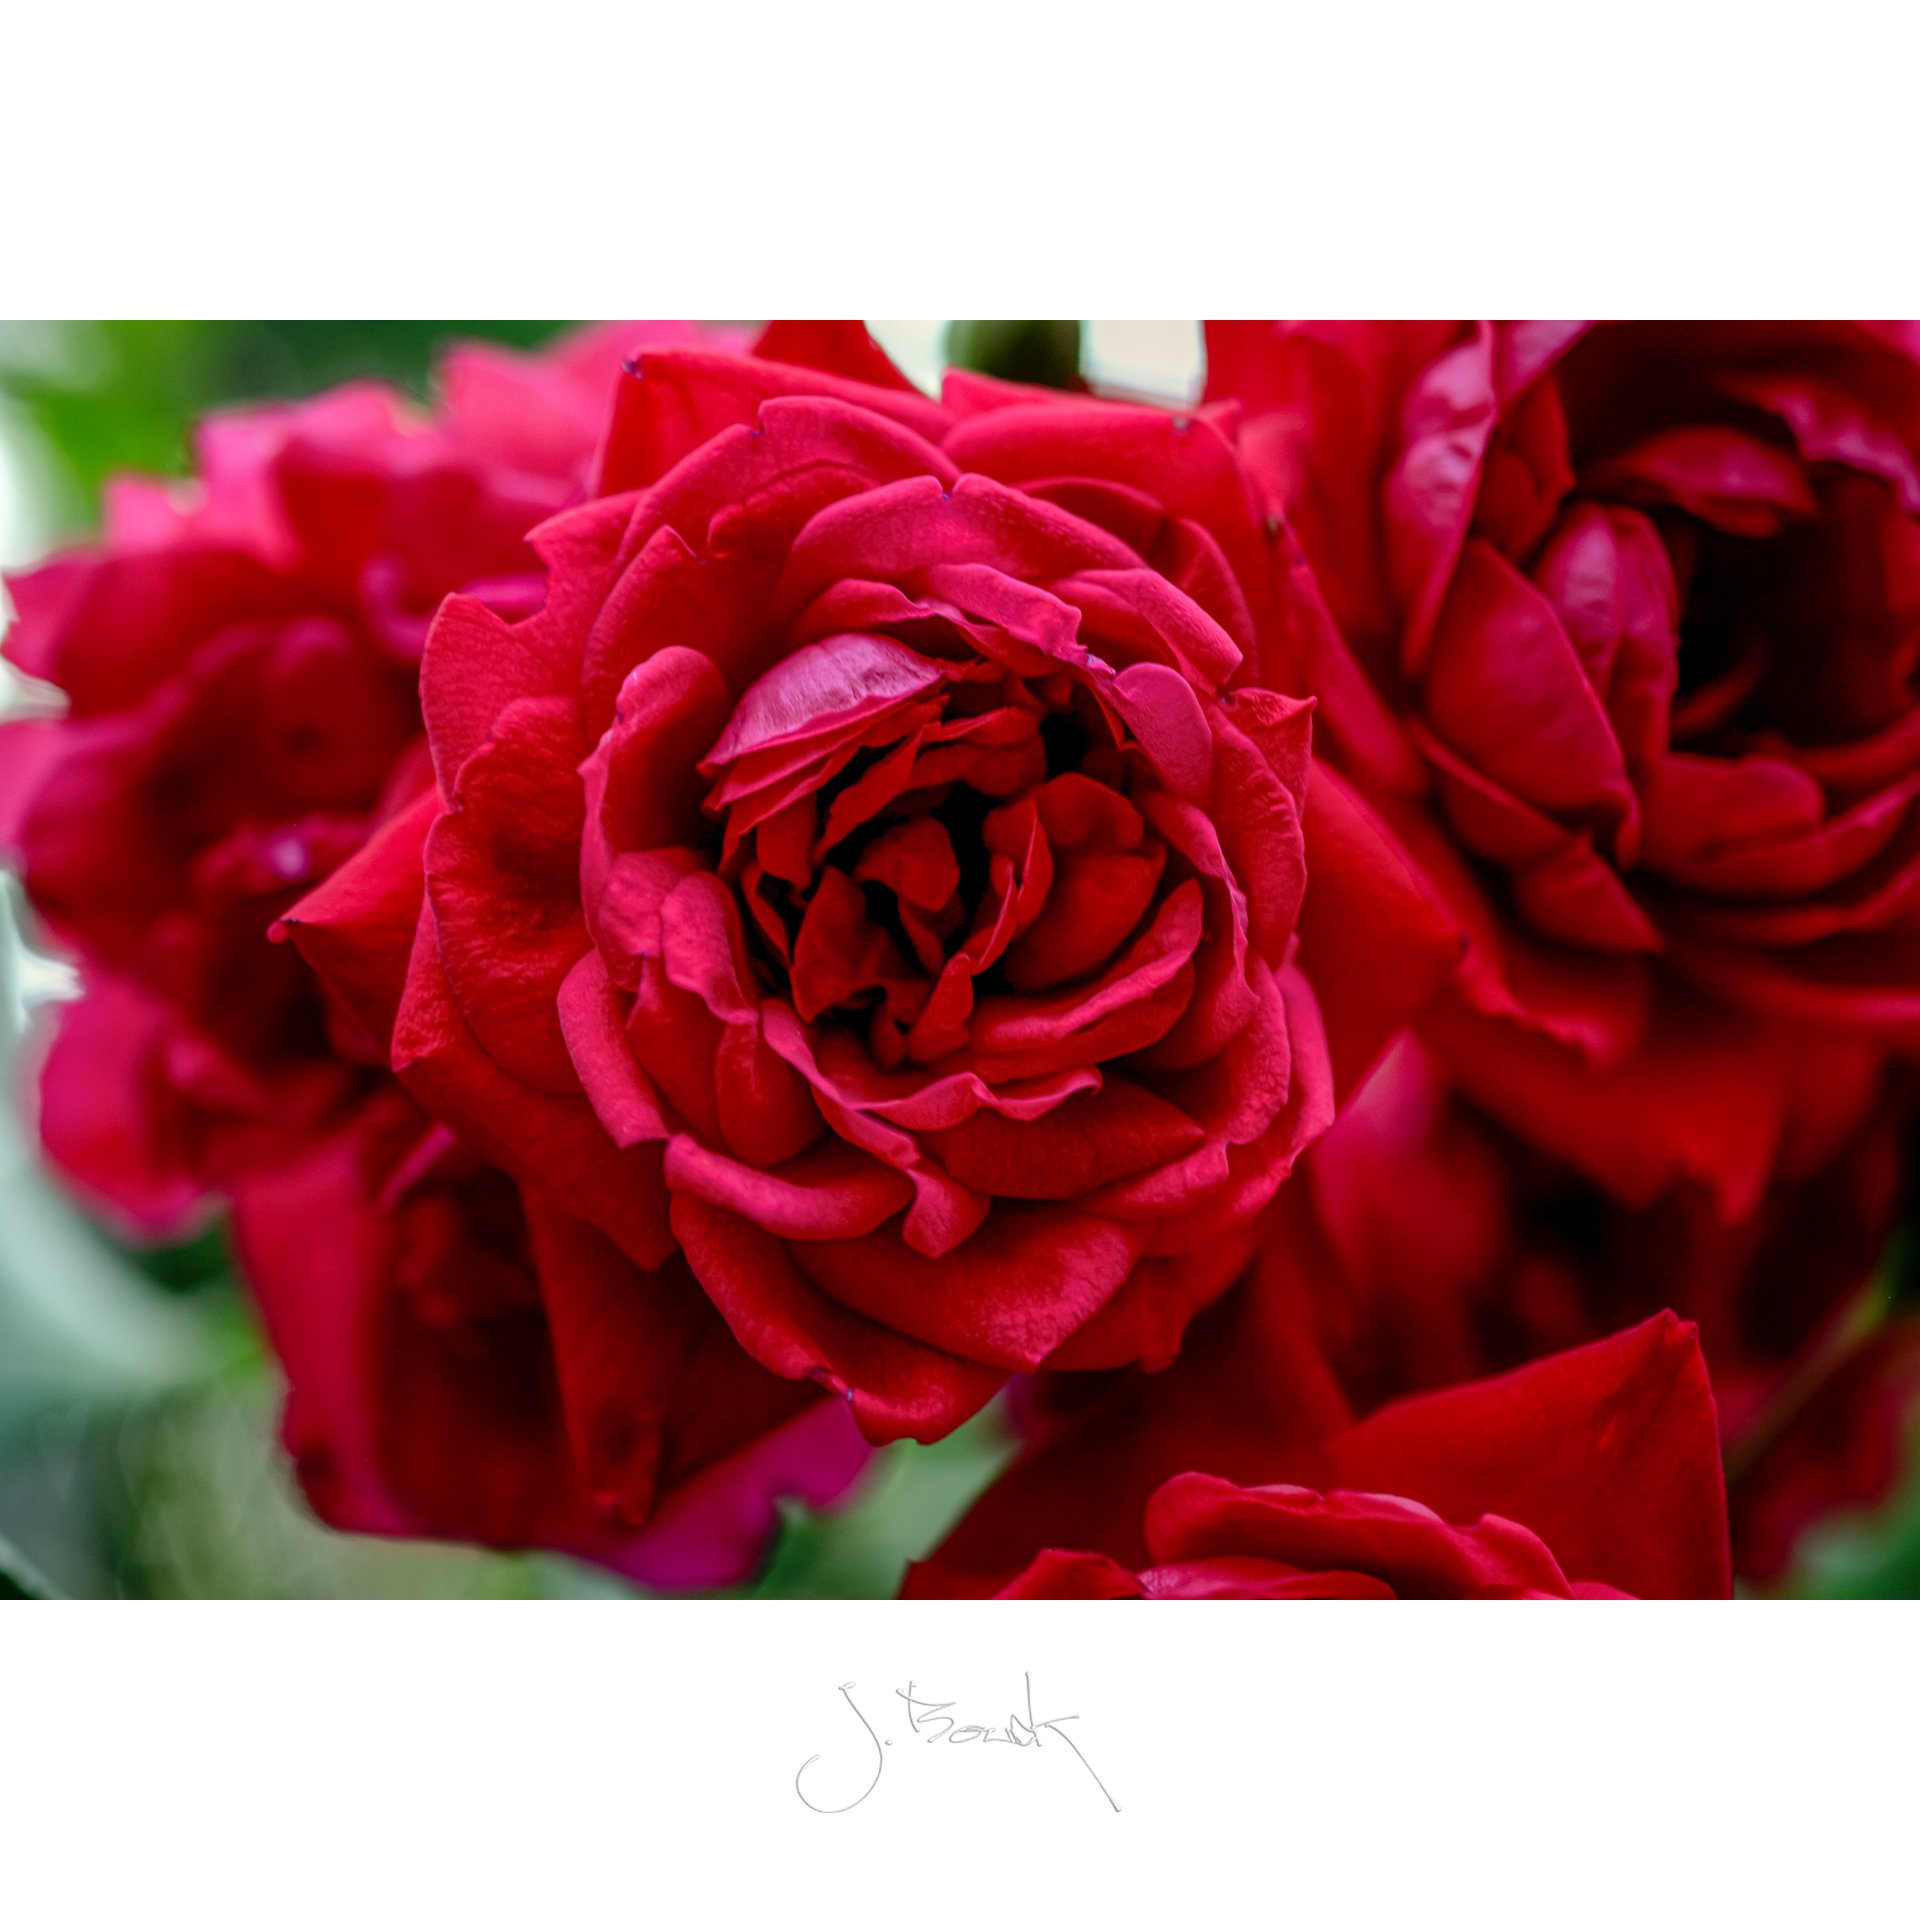 Roses 3180